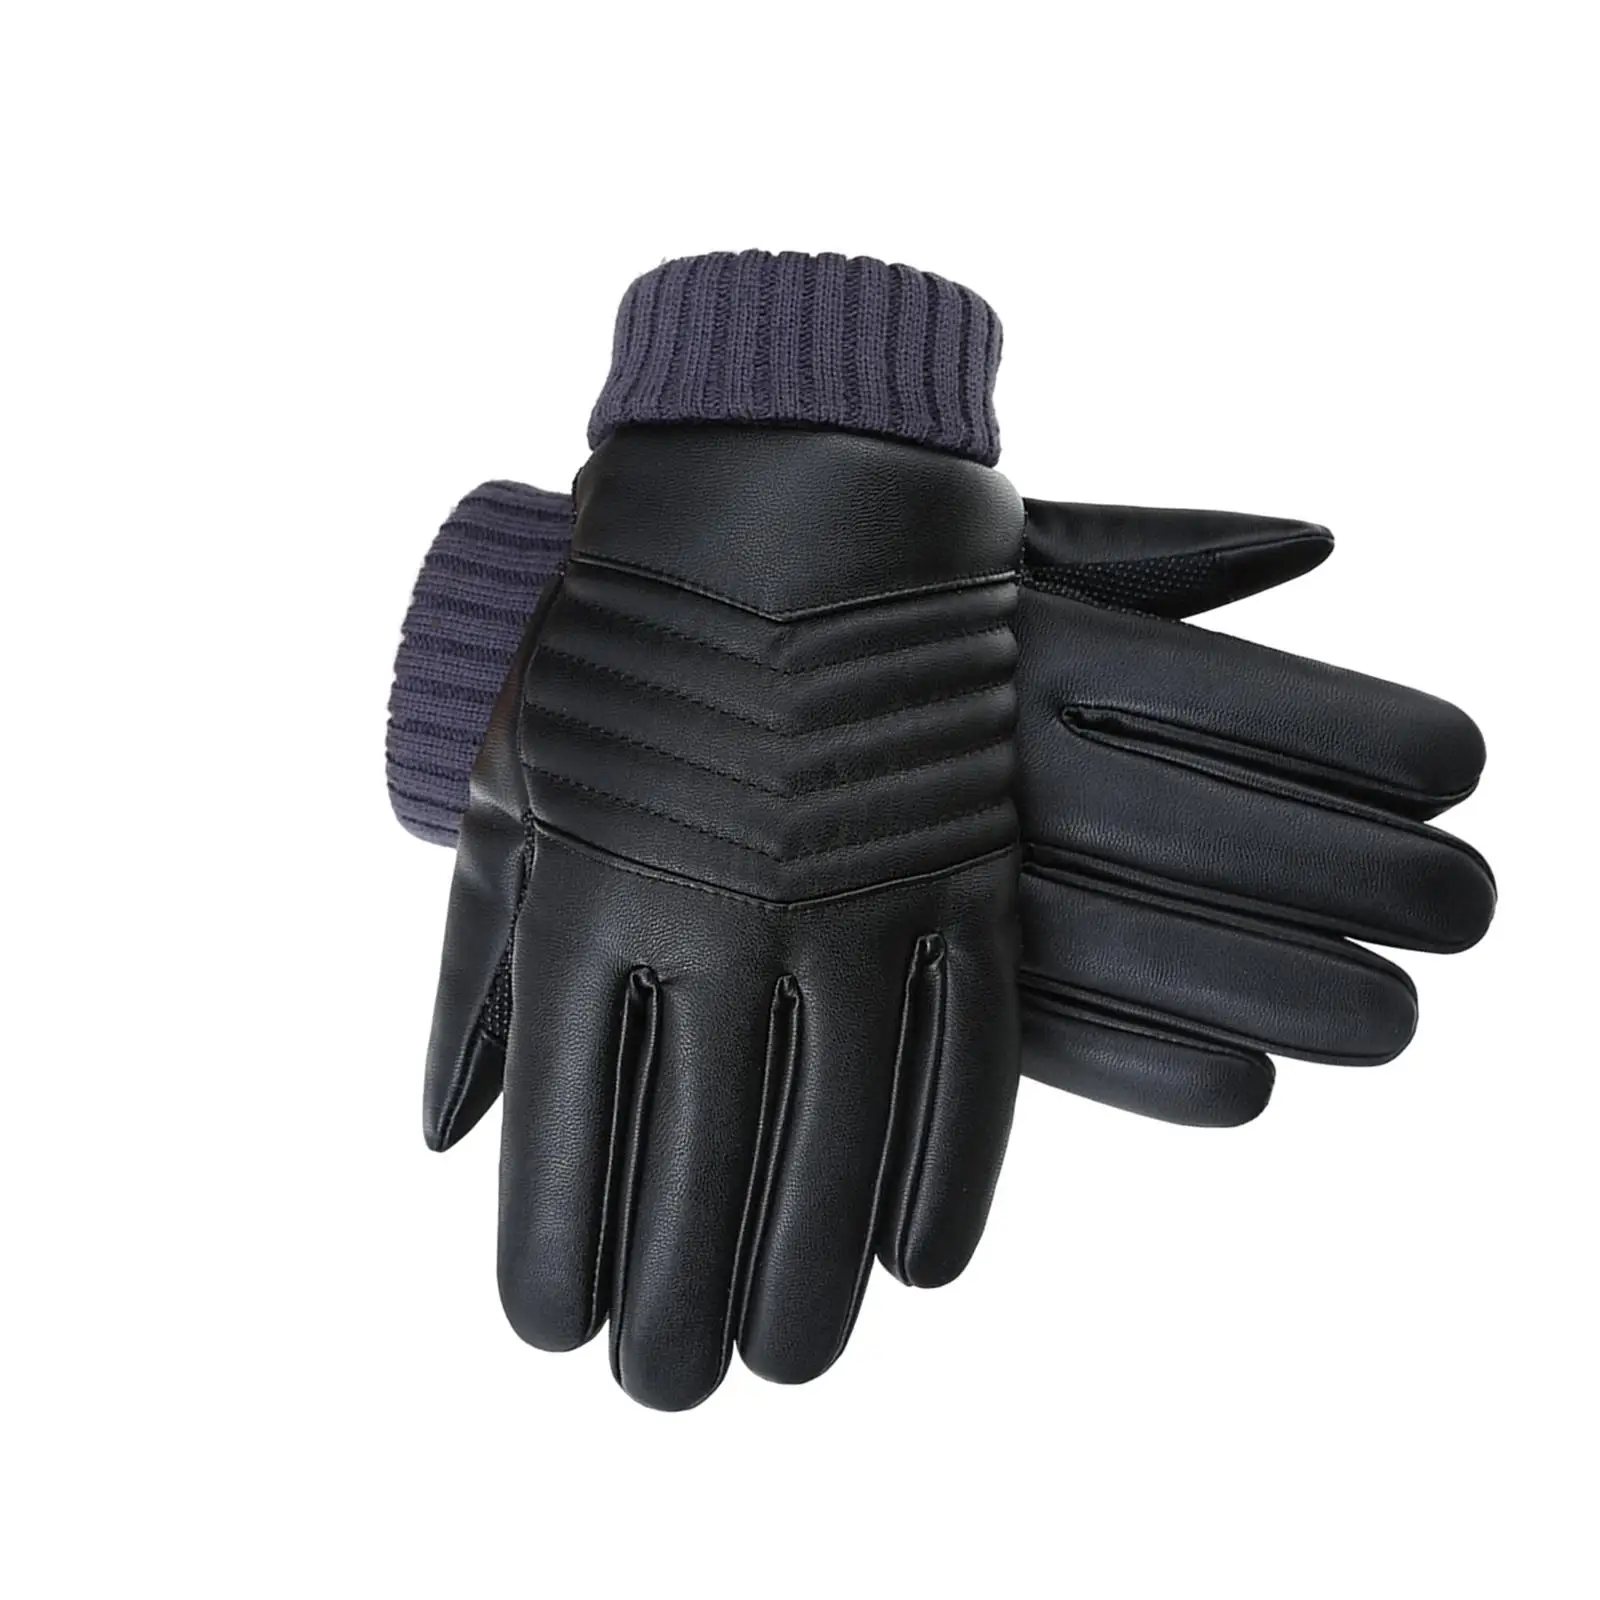 Winter Gloves Wear Resistant Soft Non Slip Touchscreen Warm Gloves for Women Men Running Motorcycle Climbing Outdoor Sports